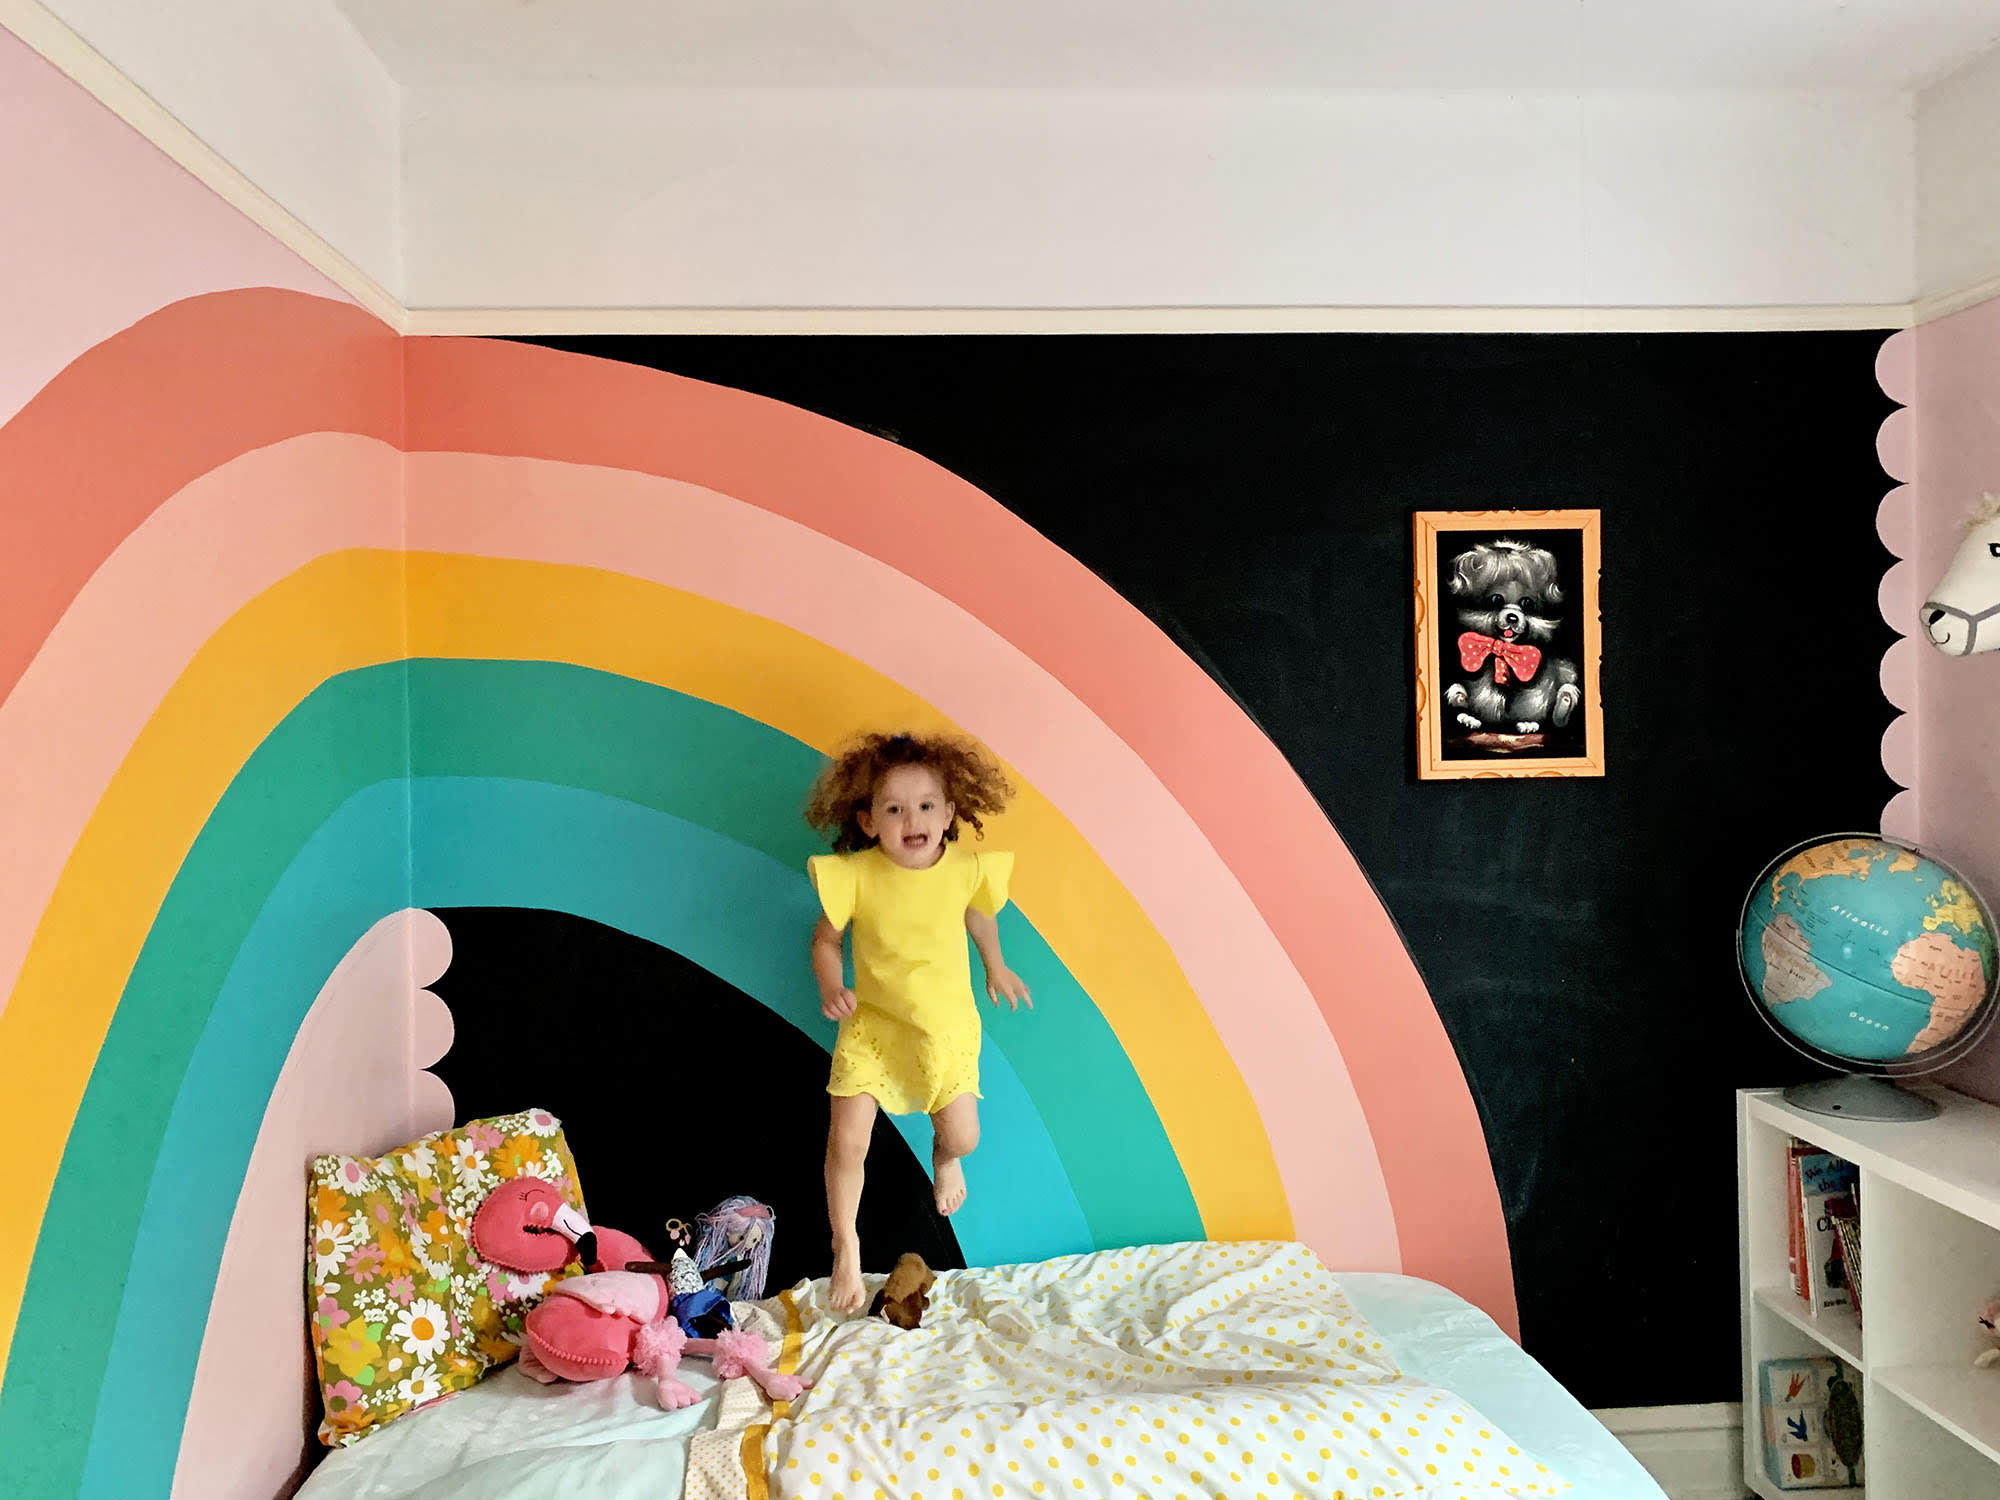 Colorful rainbow wall  Modern kids bedroom, Rainbow stripe wall, Striped  wall